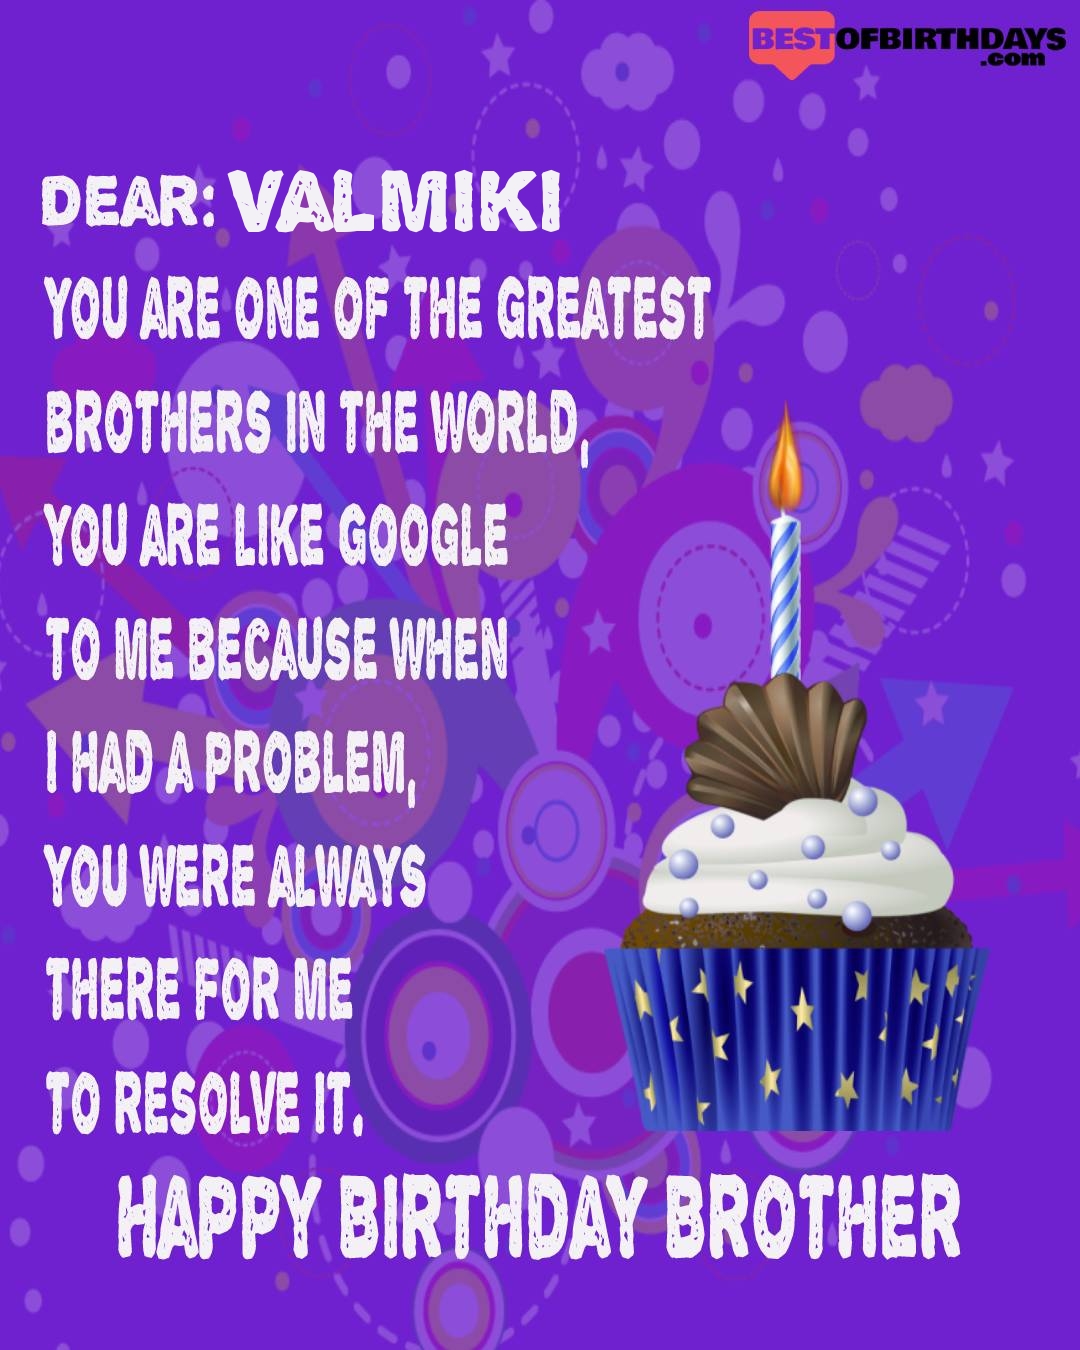 Happy birthday valmiki bhai brother bro